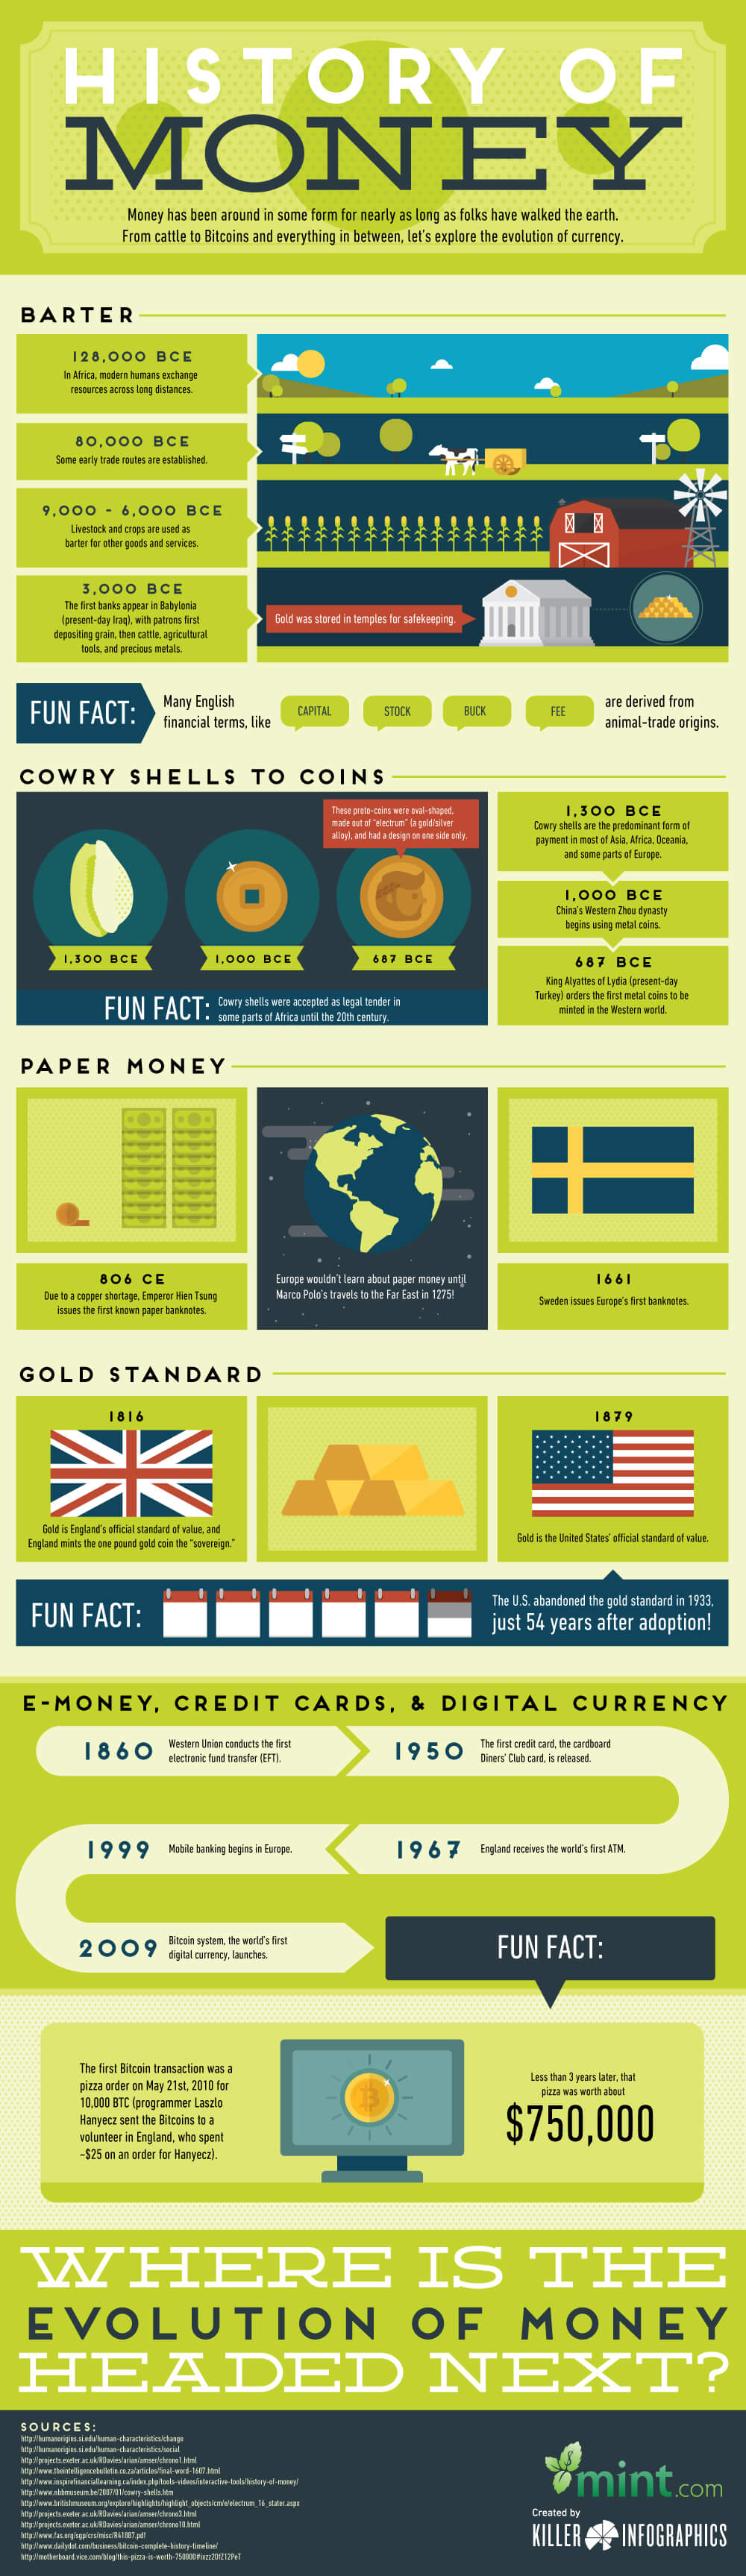 History of Money how Money has evolved